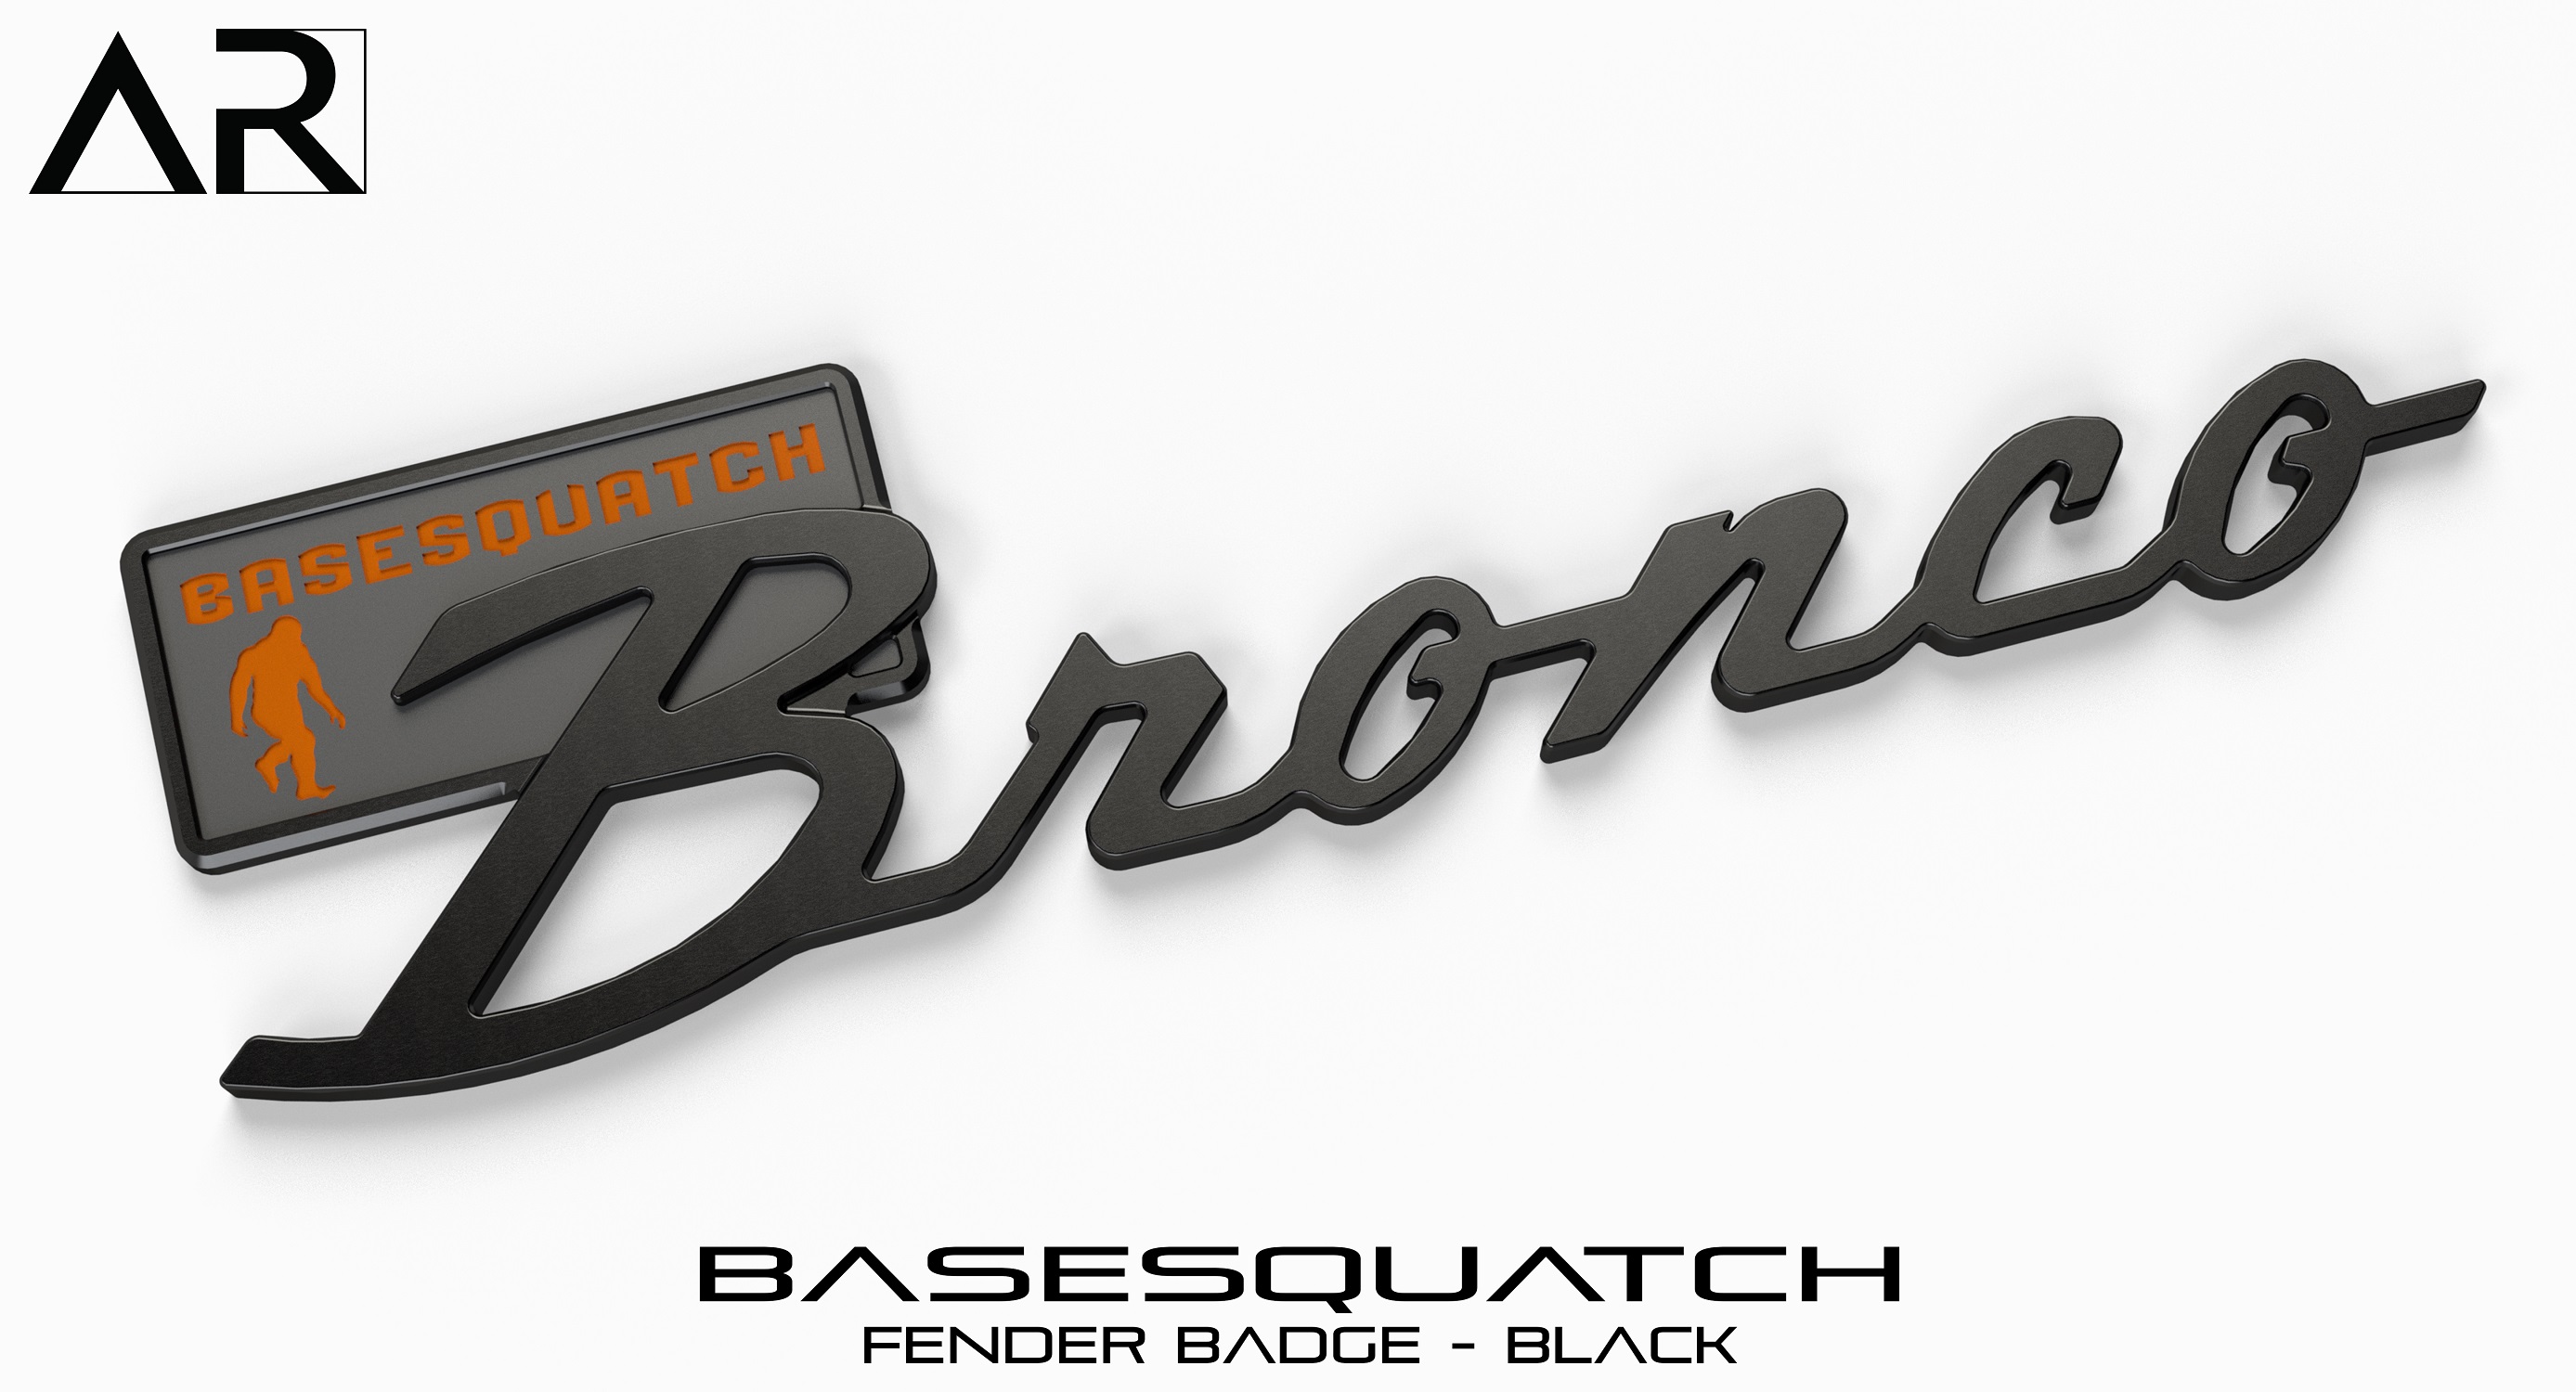 Ford Bronco AR | BRONCO CLASSIC DNA Fender Badge 1601009 - Fender Badge - Basesquatch - Black